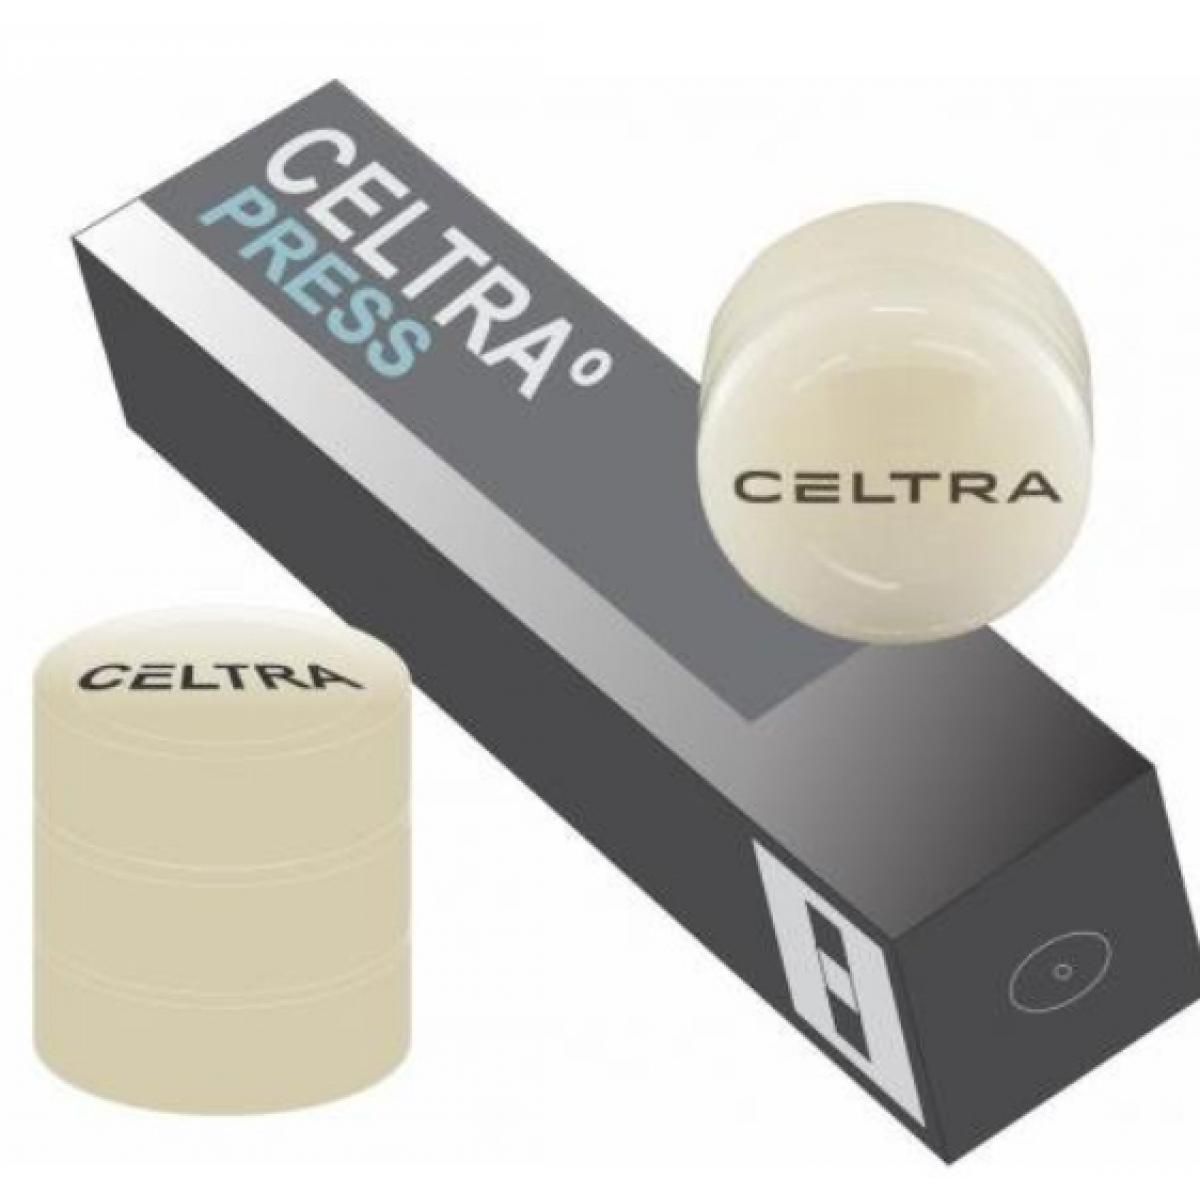 CELTRA PRESS MT B1 5 X 3 GR DENTSPLY -